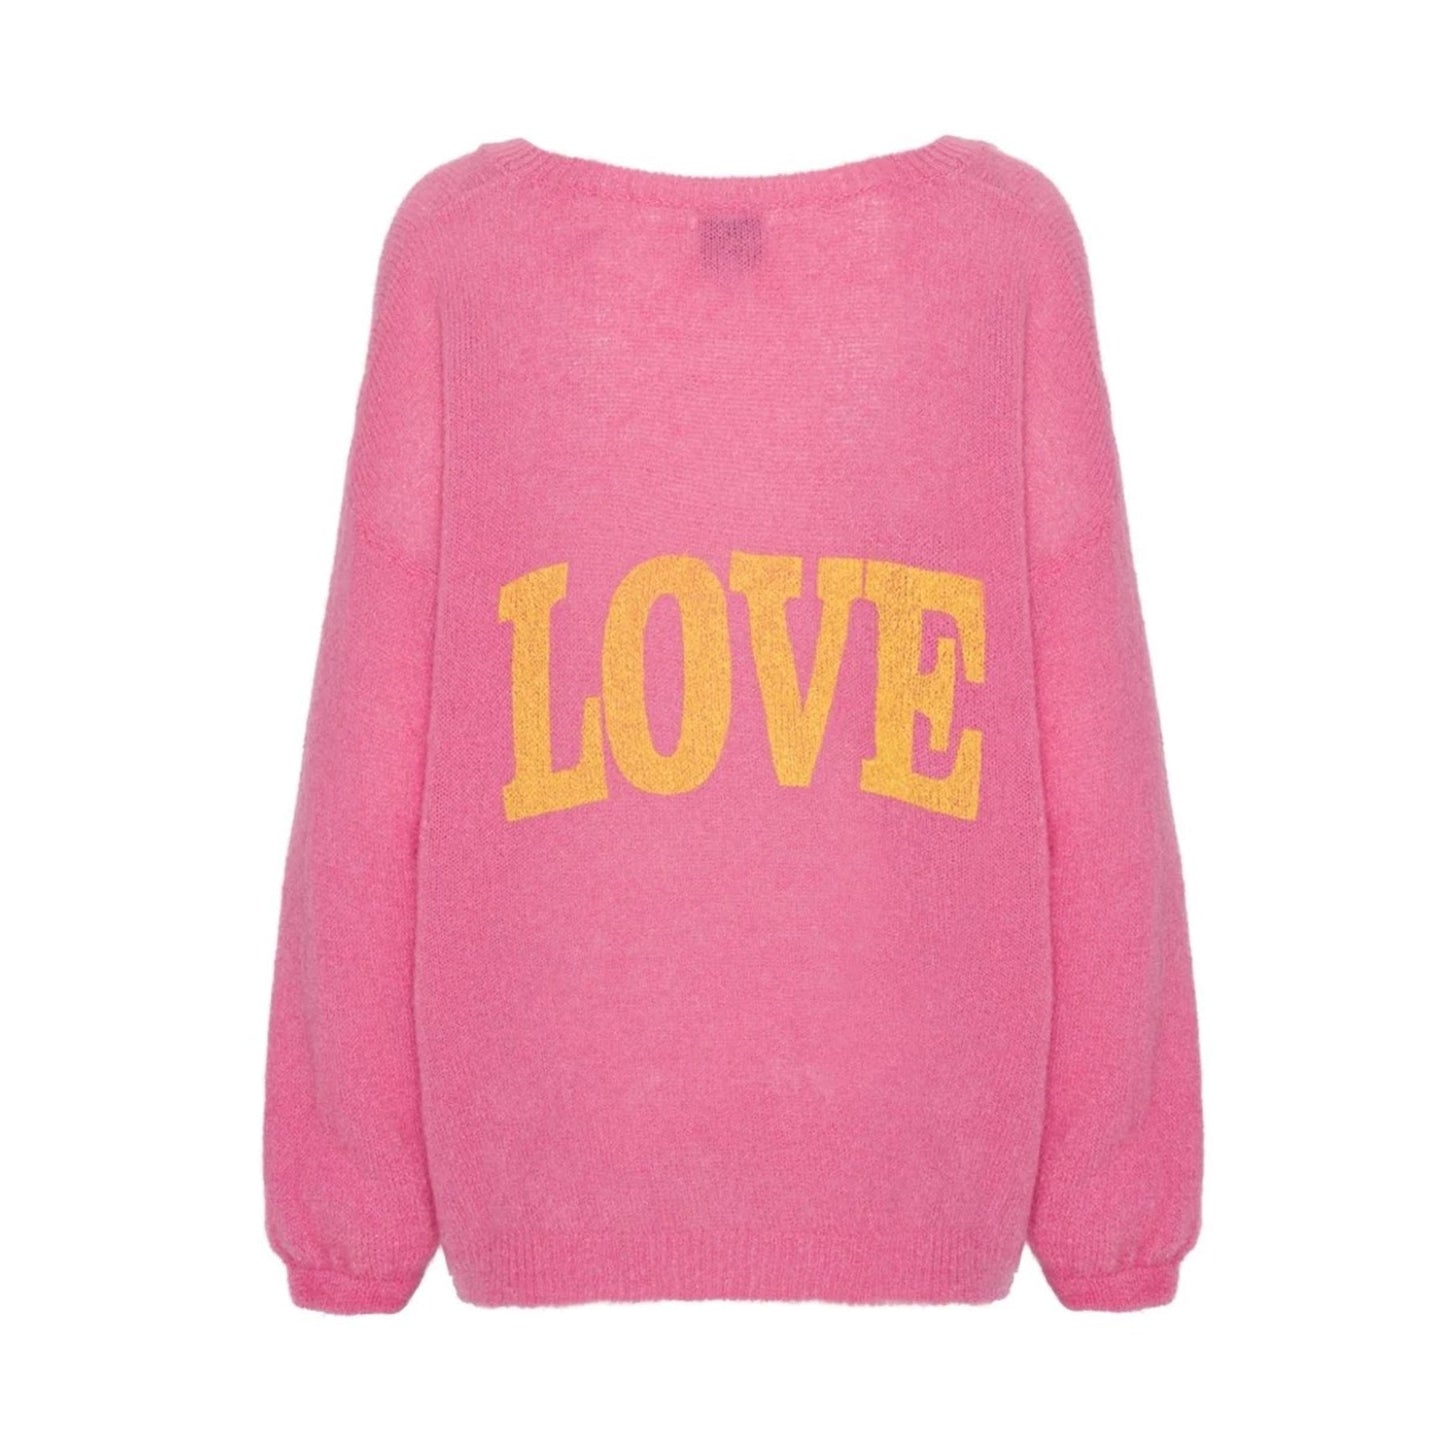 Americandreams Pullover Love Pink Yellow - KNOCKNOK Fashion